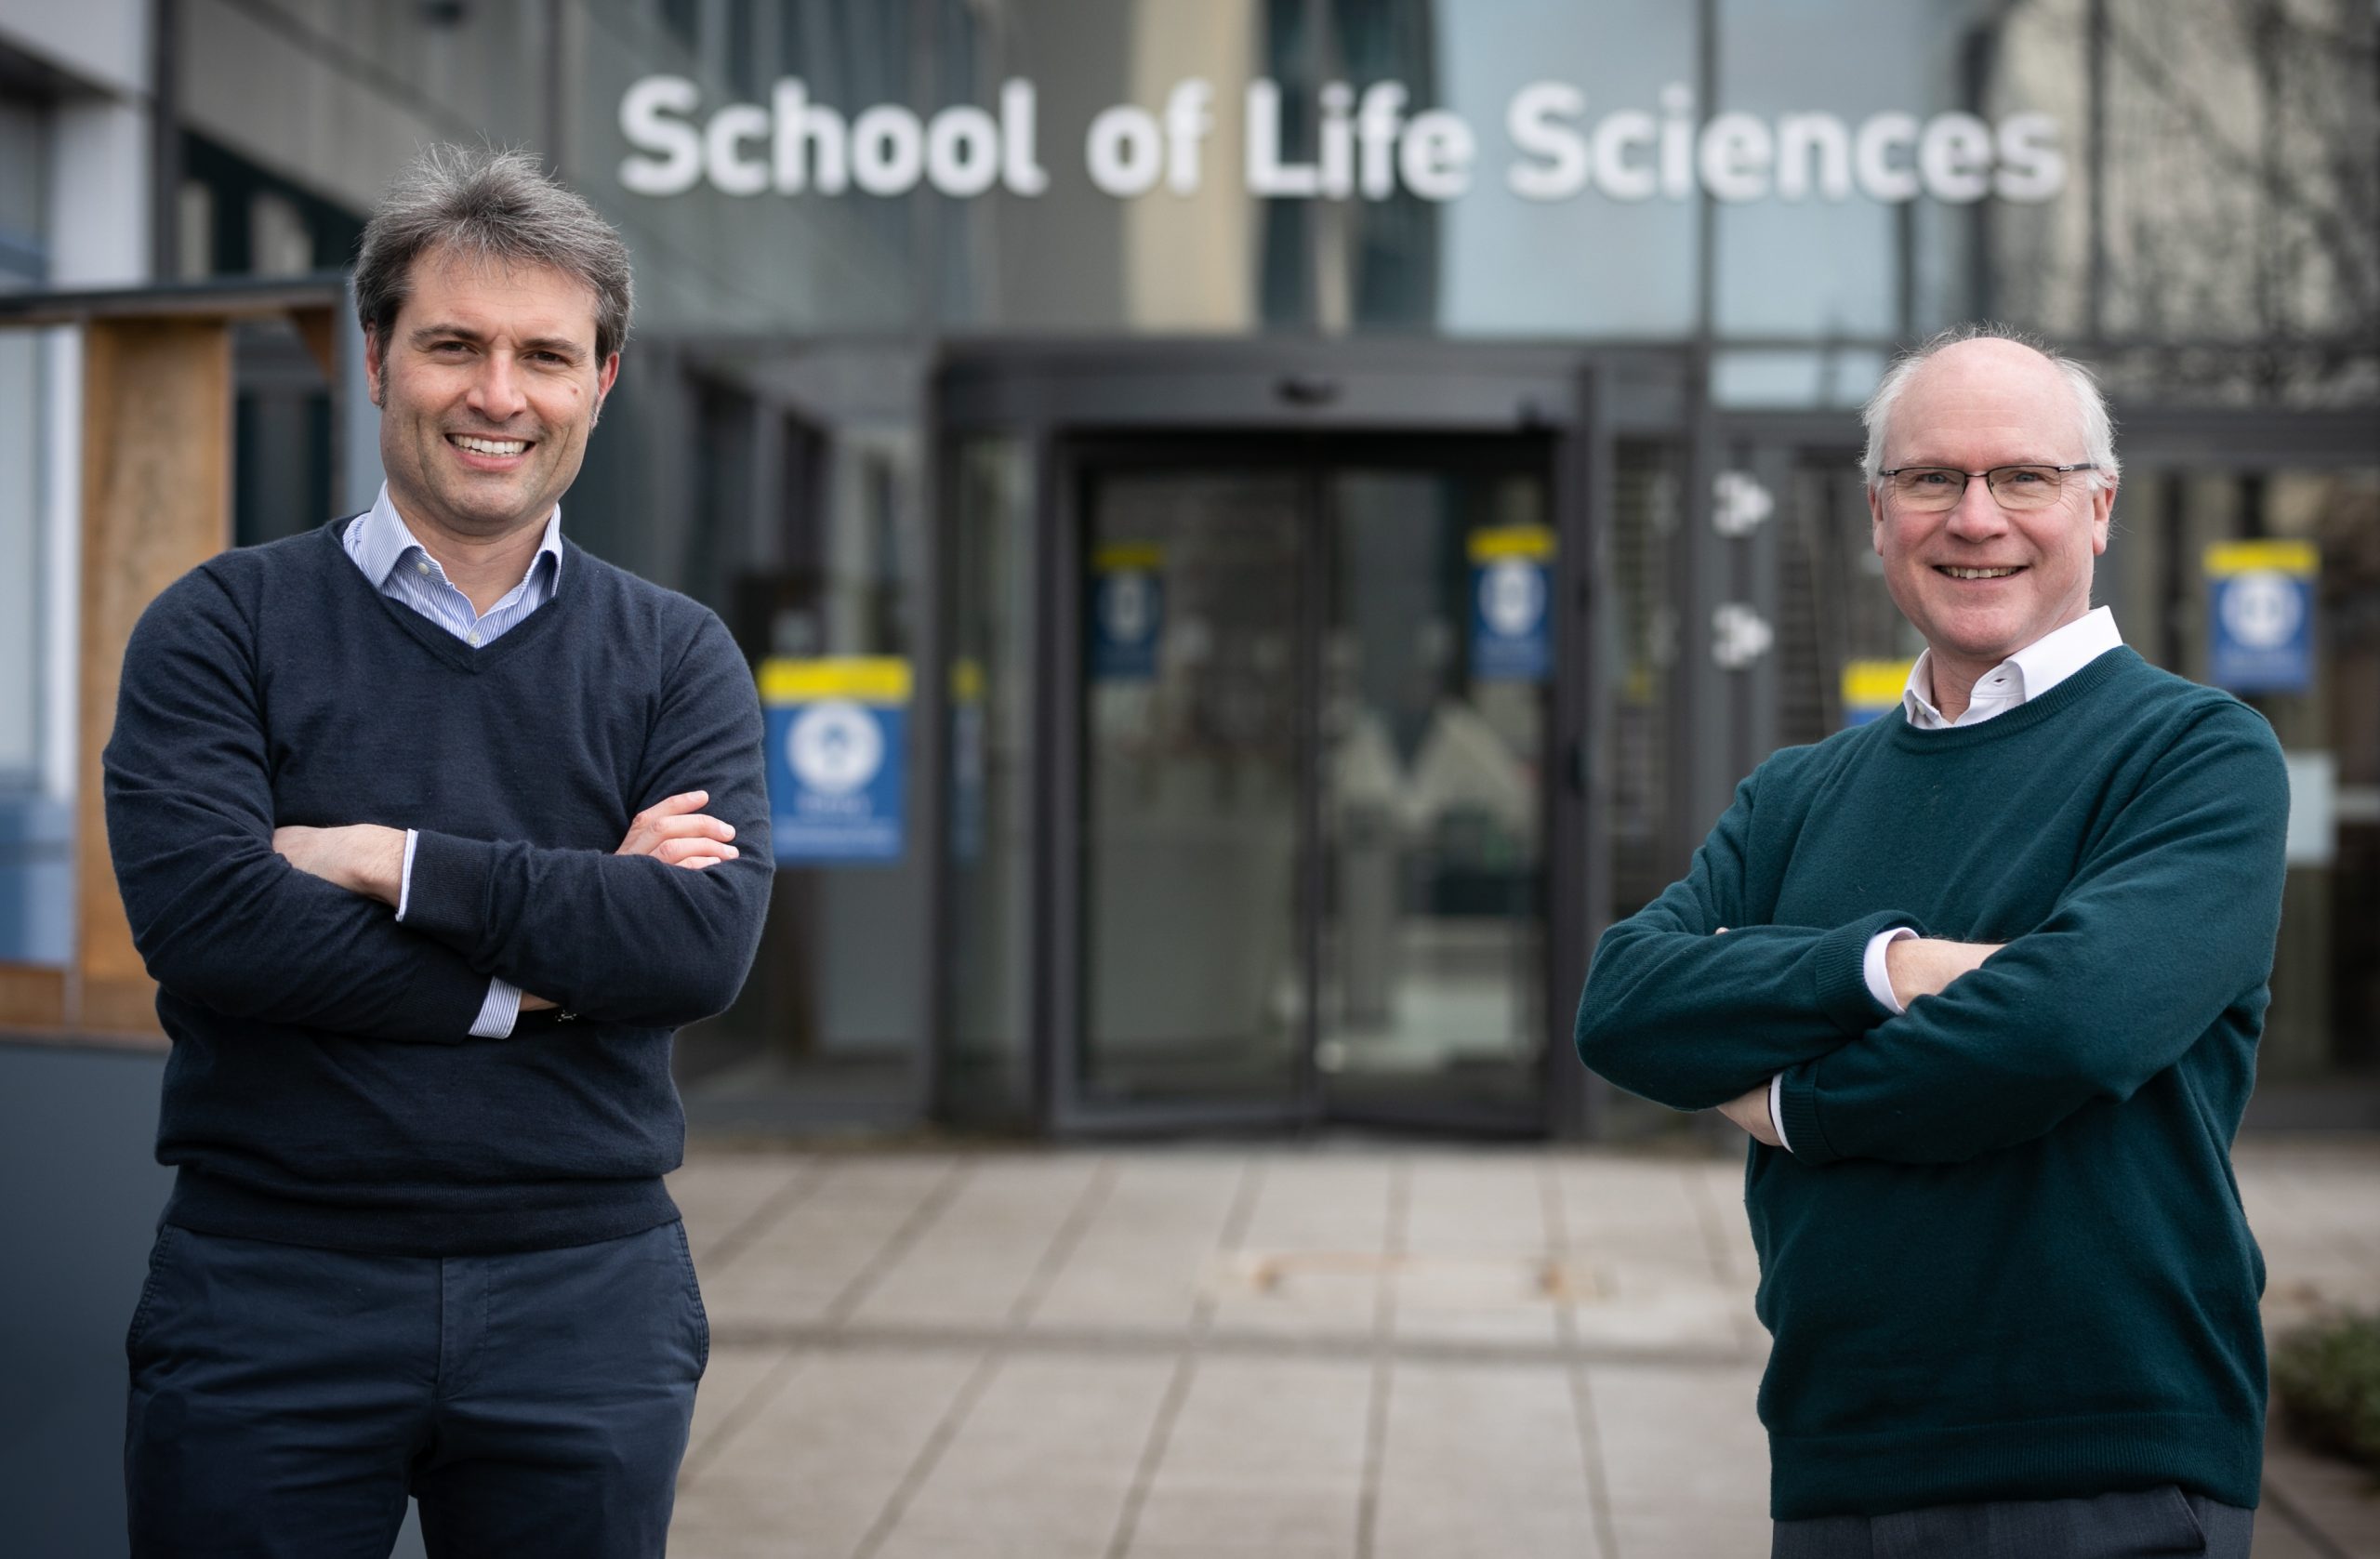 Alessio Ciulli FRSC, Life Sciences, Mike Ferguson, SLS - Research News Scotland 